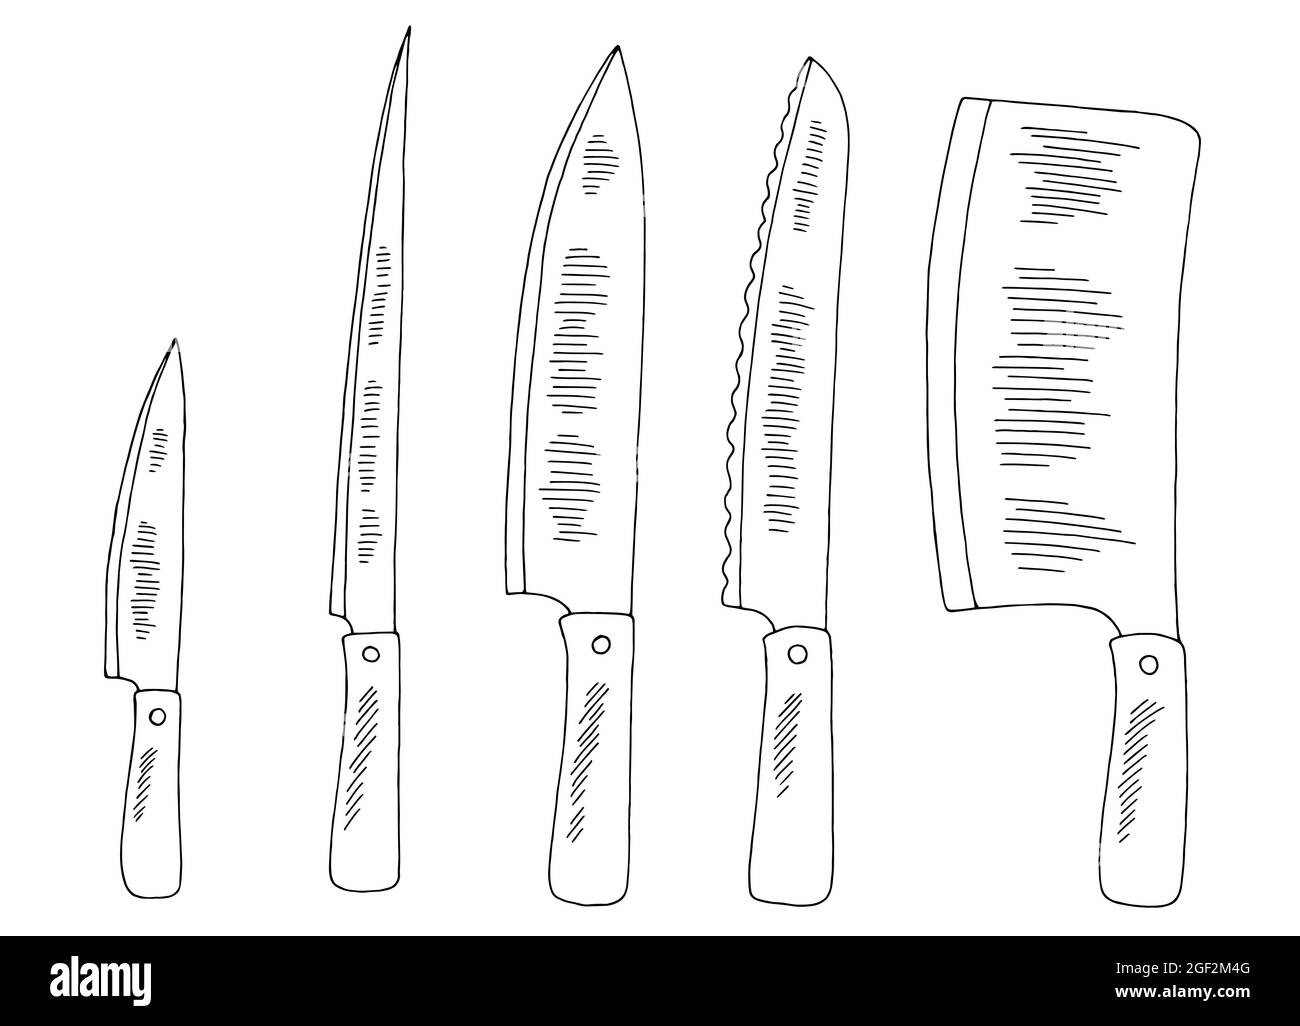 Messer Set isoliert Grafik schwarz weiß Skizze Illustration Vektor  Stock-Vektorgrafik - Alamy